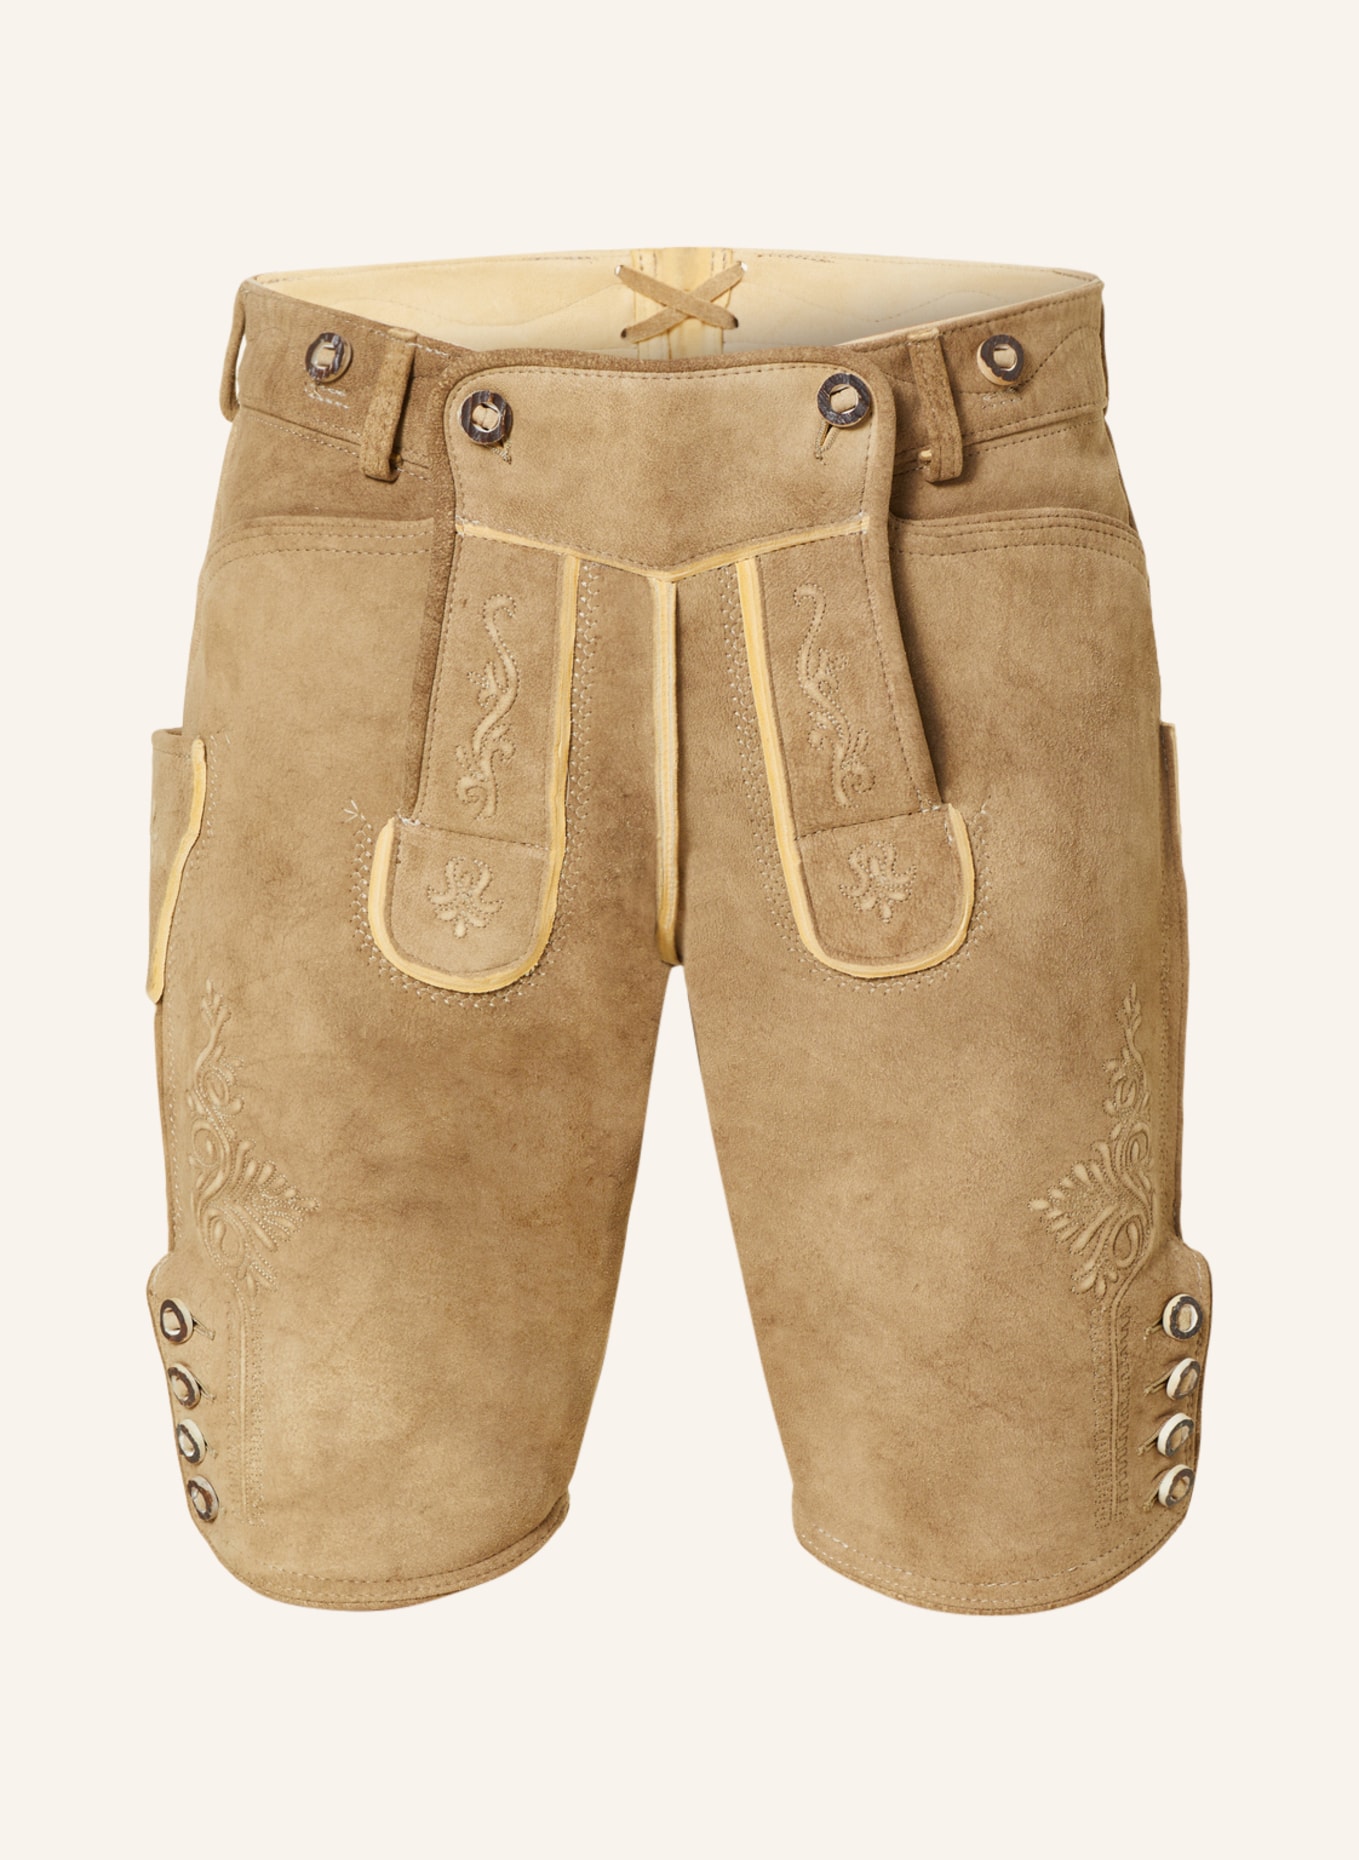 OSTARRICHI Trachten leather trousers DONAU, Color: BEIGE (Image 1)